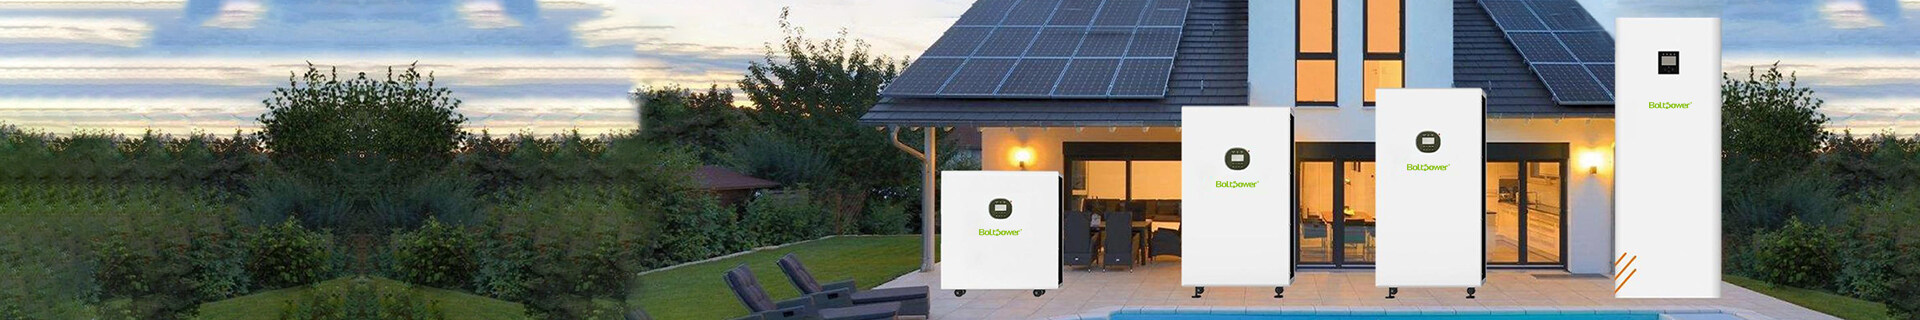 Almacenamiento de baterías para sistemas residenciales de almacenamiento de baterías solares residenciales, sistemas solares residenciales con almacenamiento de baterías, sistema de almacenamiento de energía de batería residencial, almacenamiento de batería solar residencial